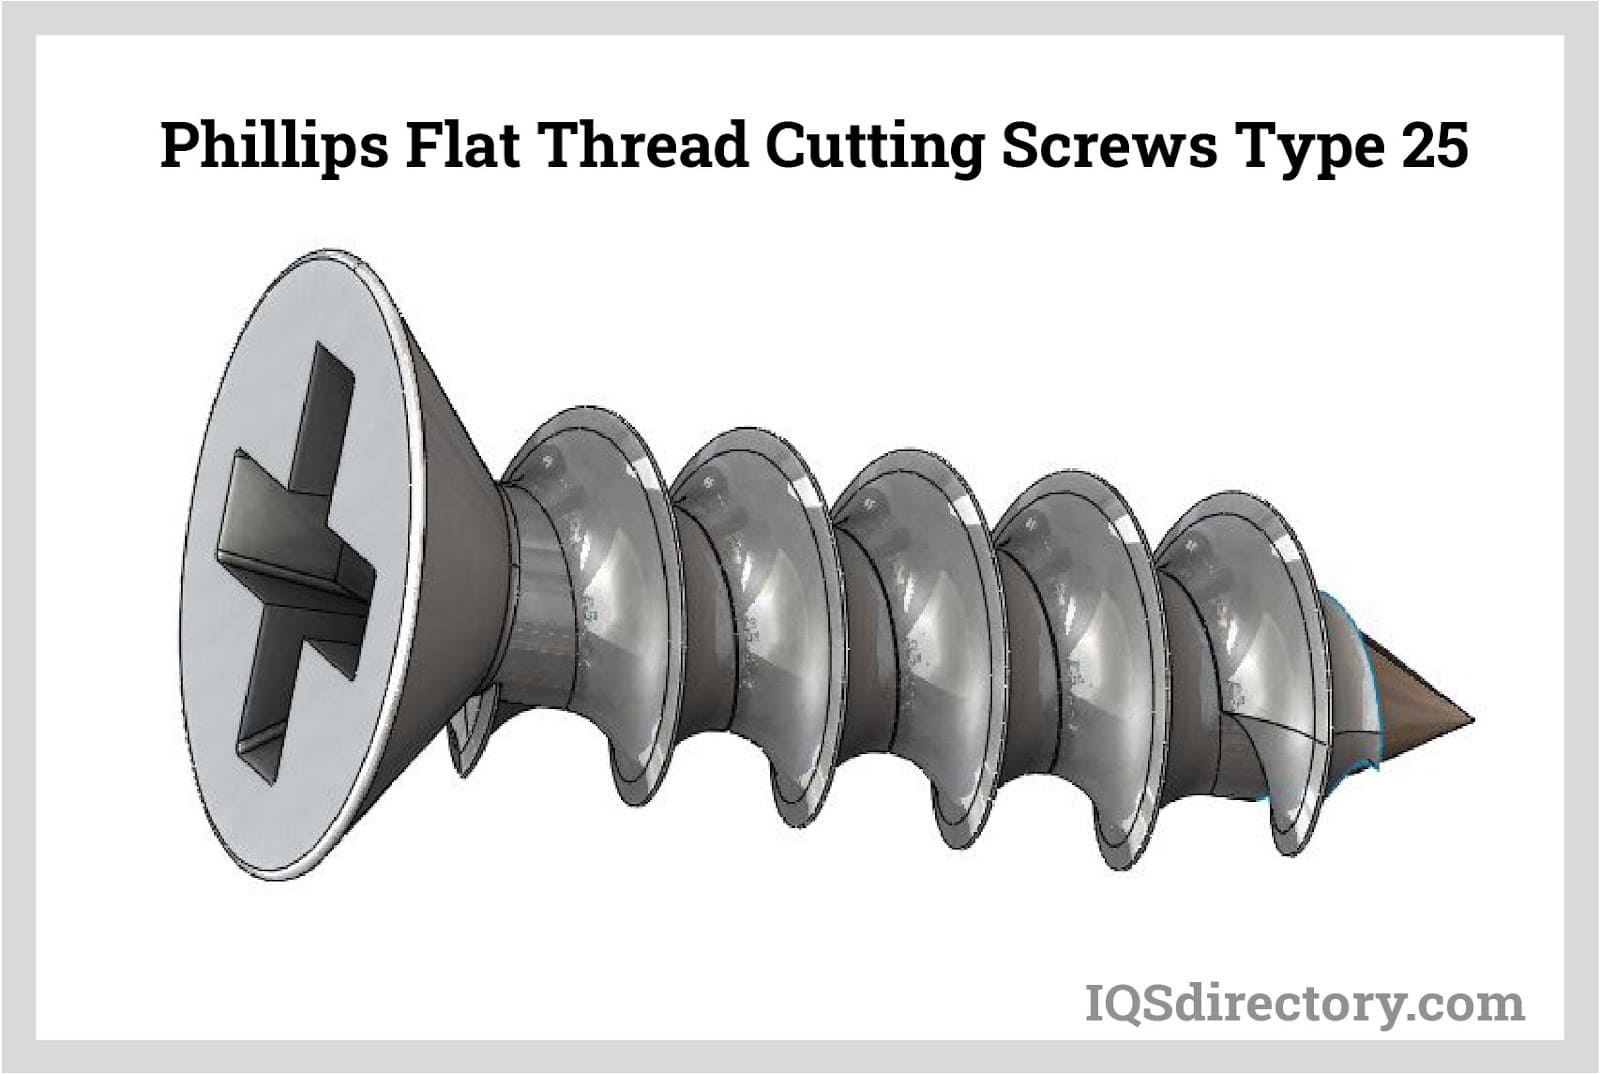 Phillips Flat Thread Cutting Screws Type 25